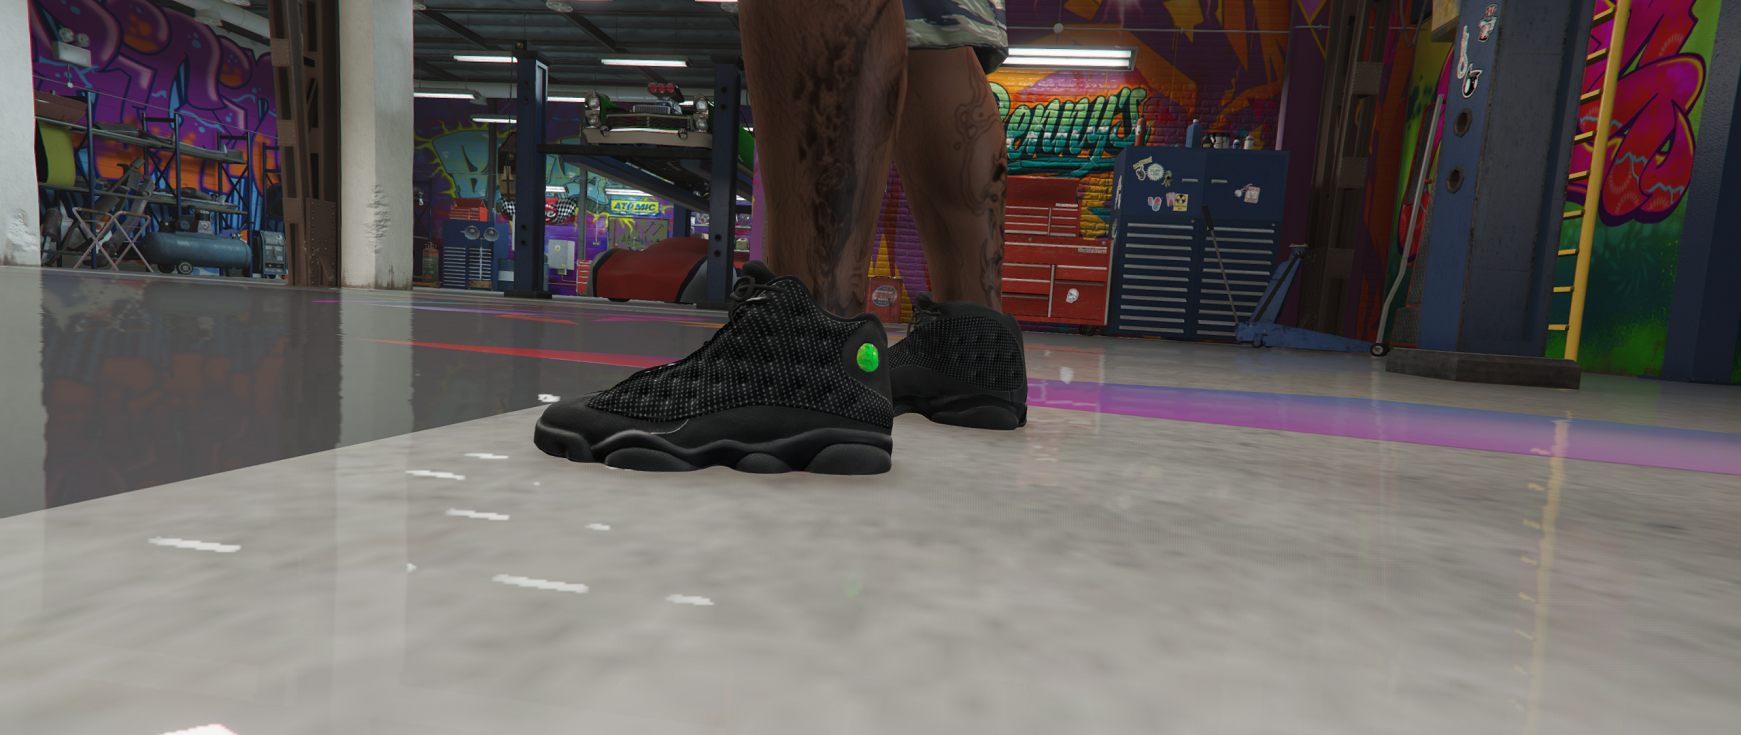 Air Jordan 13 XIII Black Cat On Foot 